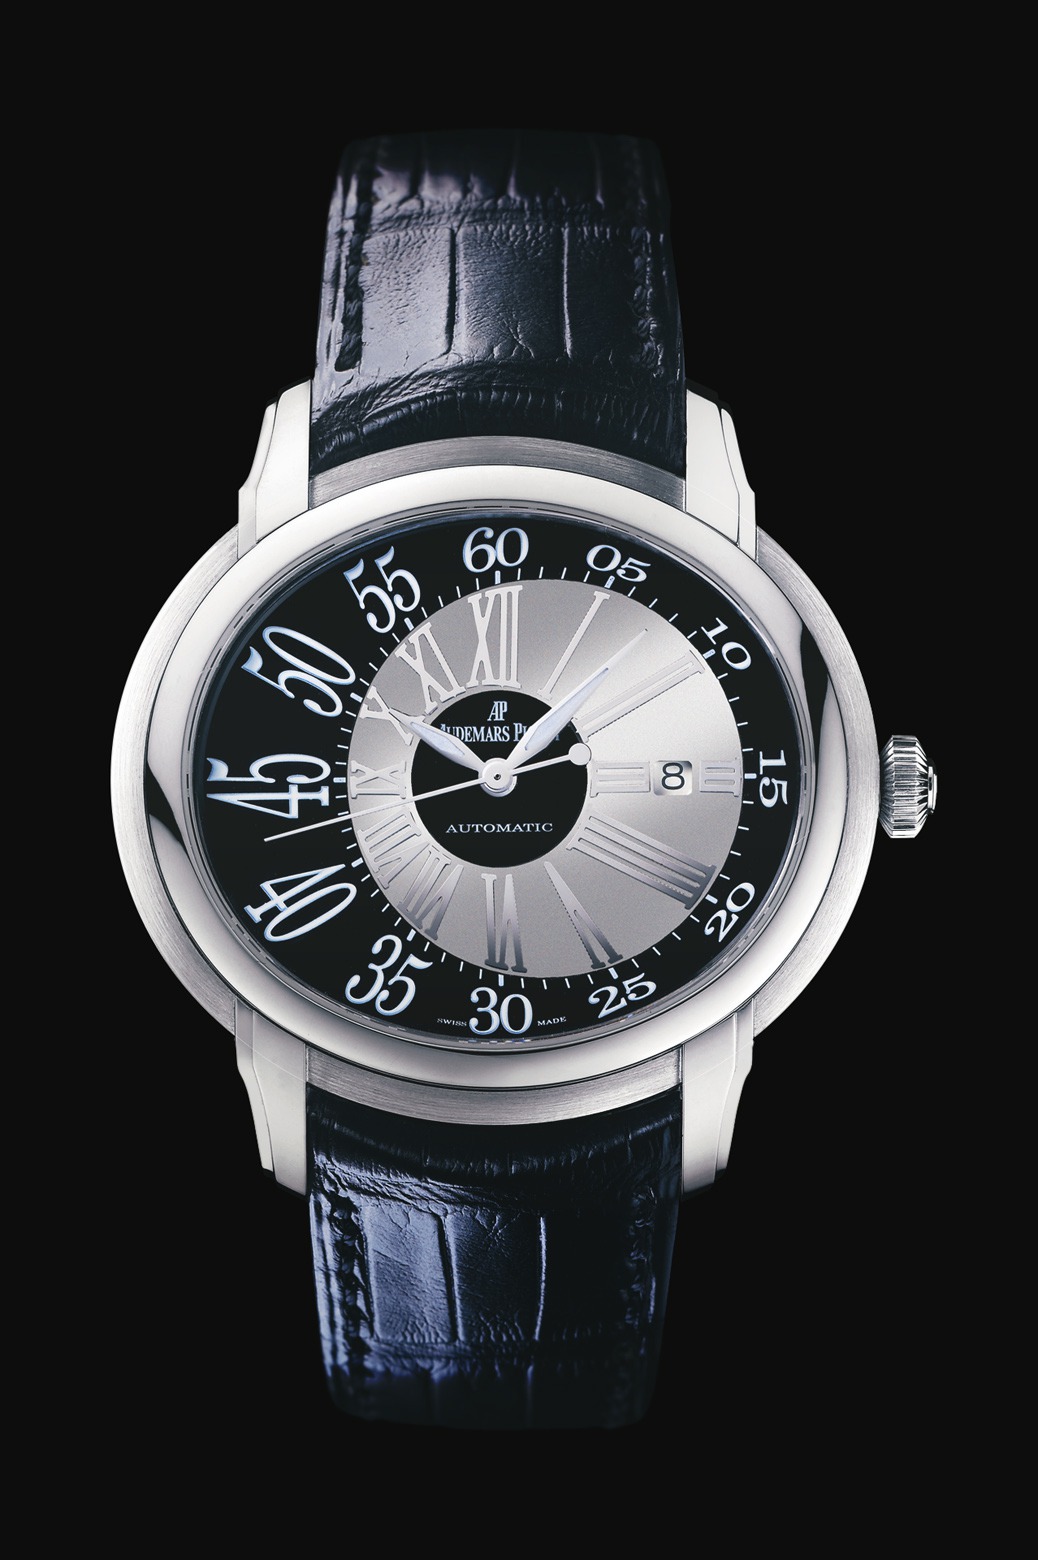 Audemars Piguet Millenary Automatic White Gold watch REF: 15320BC.OO.D002CR.01